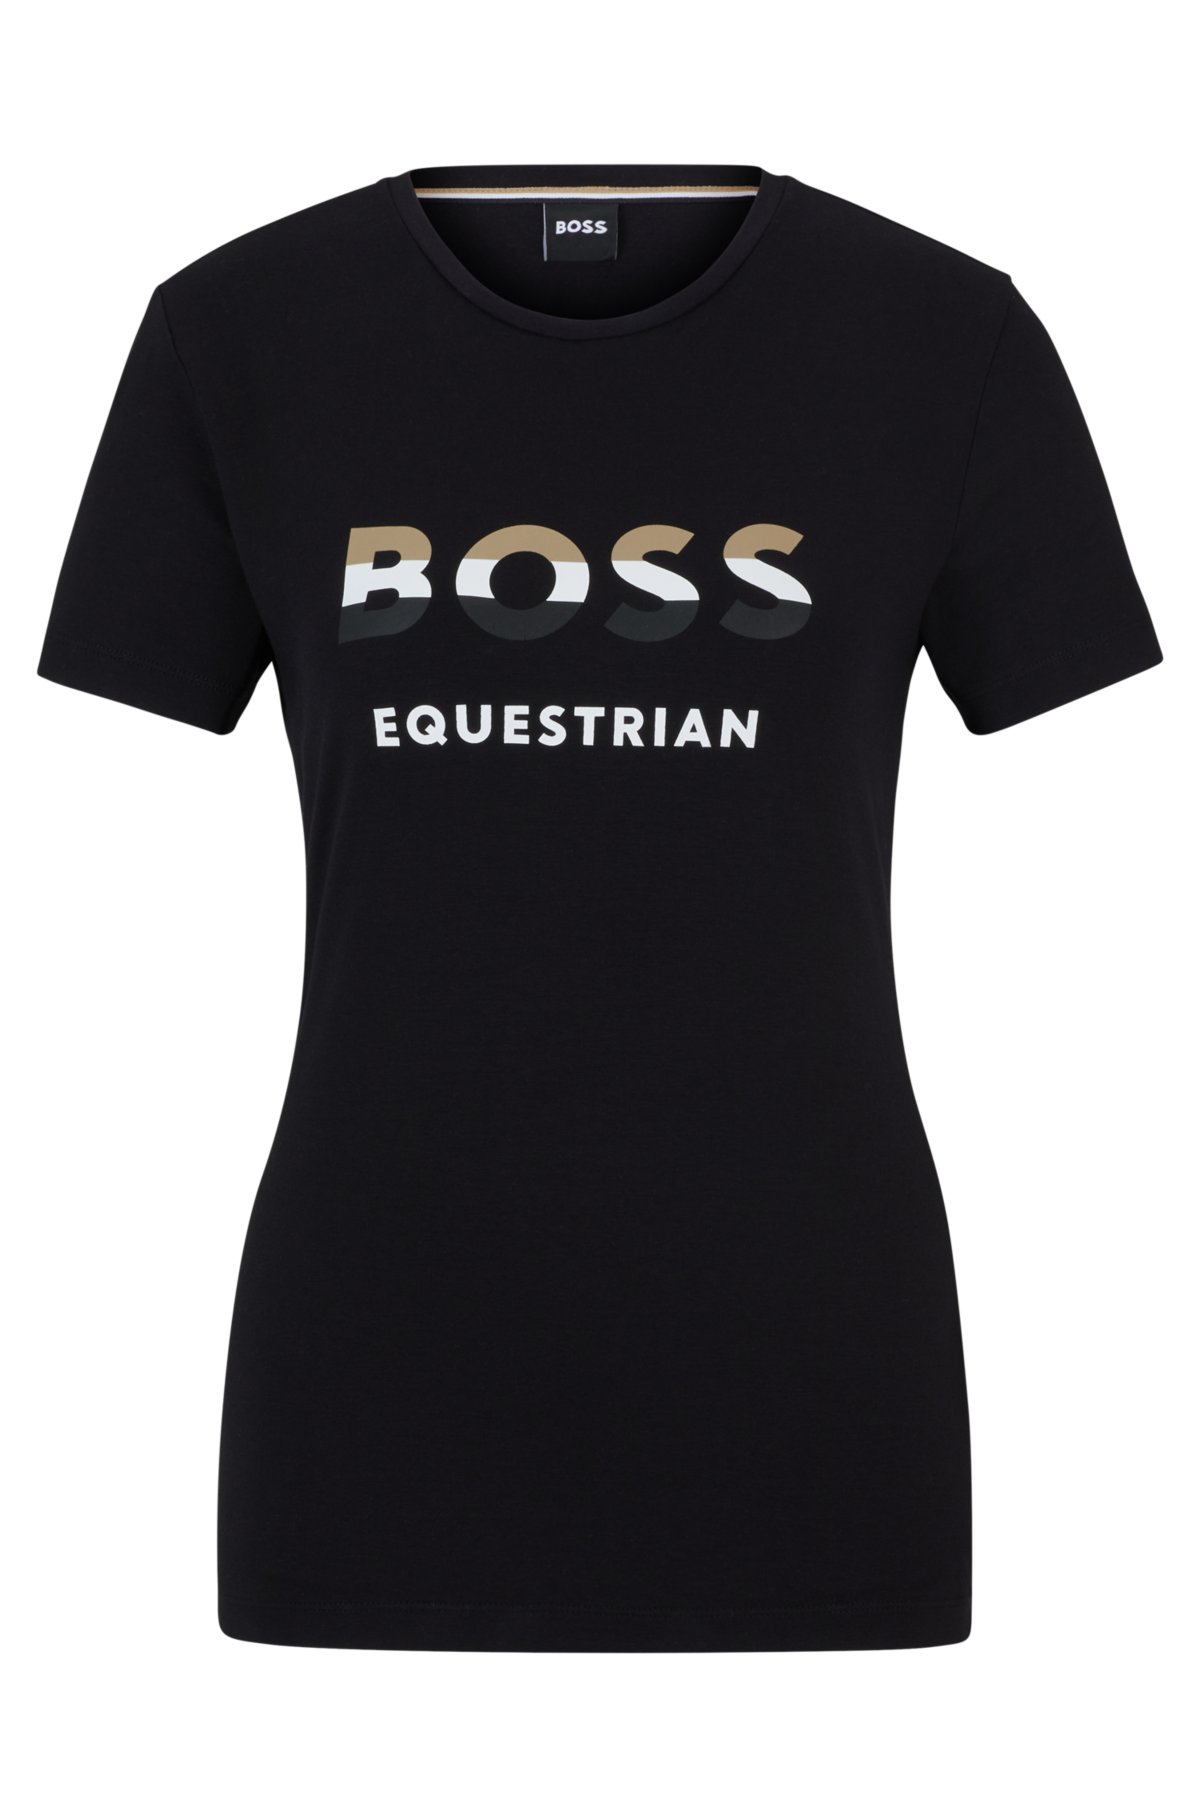 Equestrian stretch-cotton T-shirt with logo details, Black